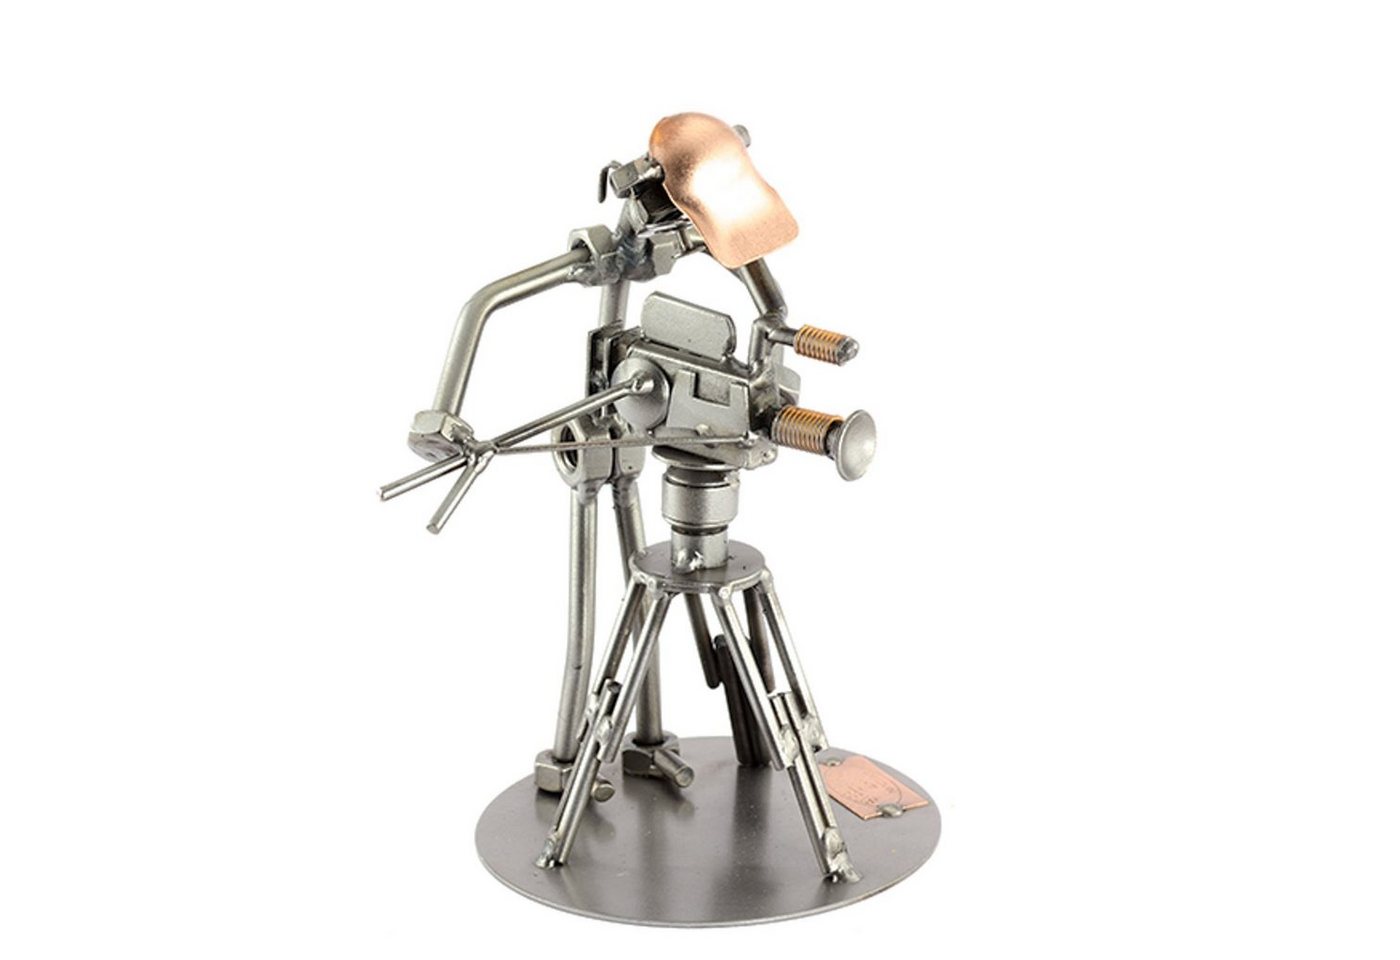 Steelman24 Dekofigur Steelman24 - Caméraman avec Stand - Sculpture de metal von Steelman24